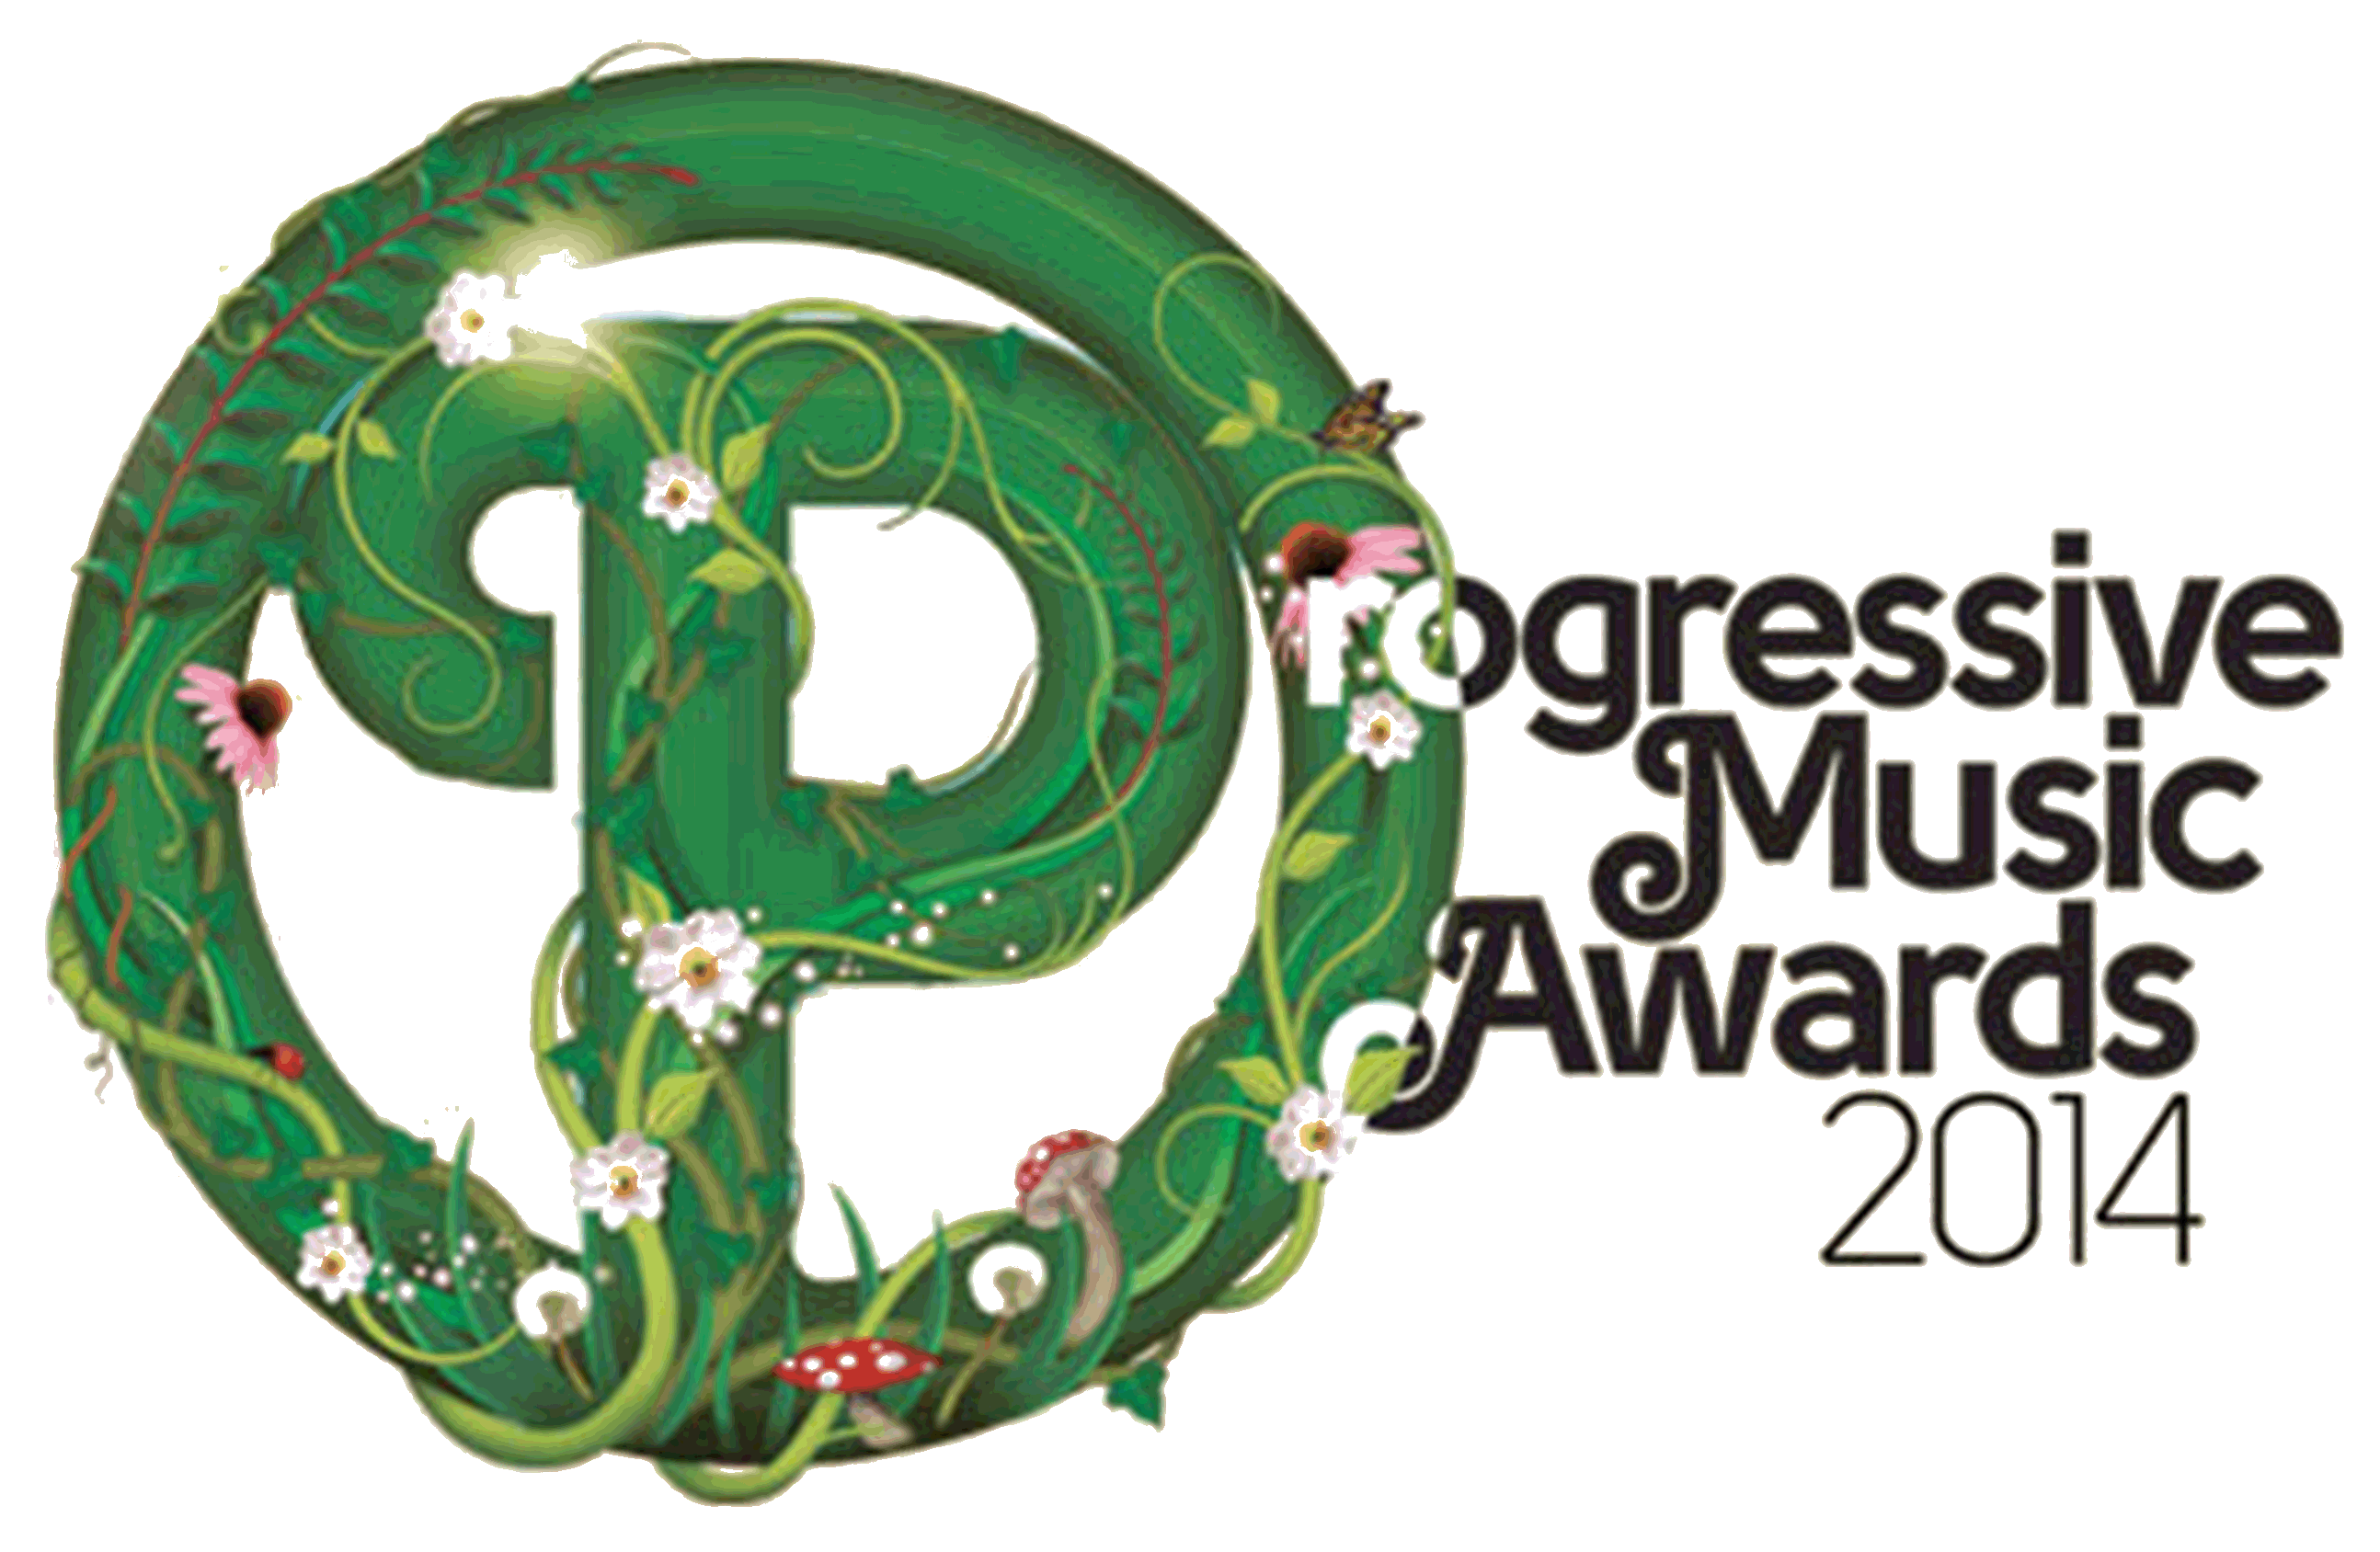 Progressive Music Awards 2014 Ad